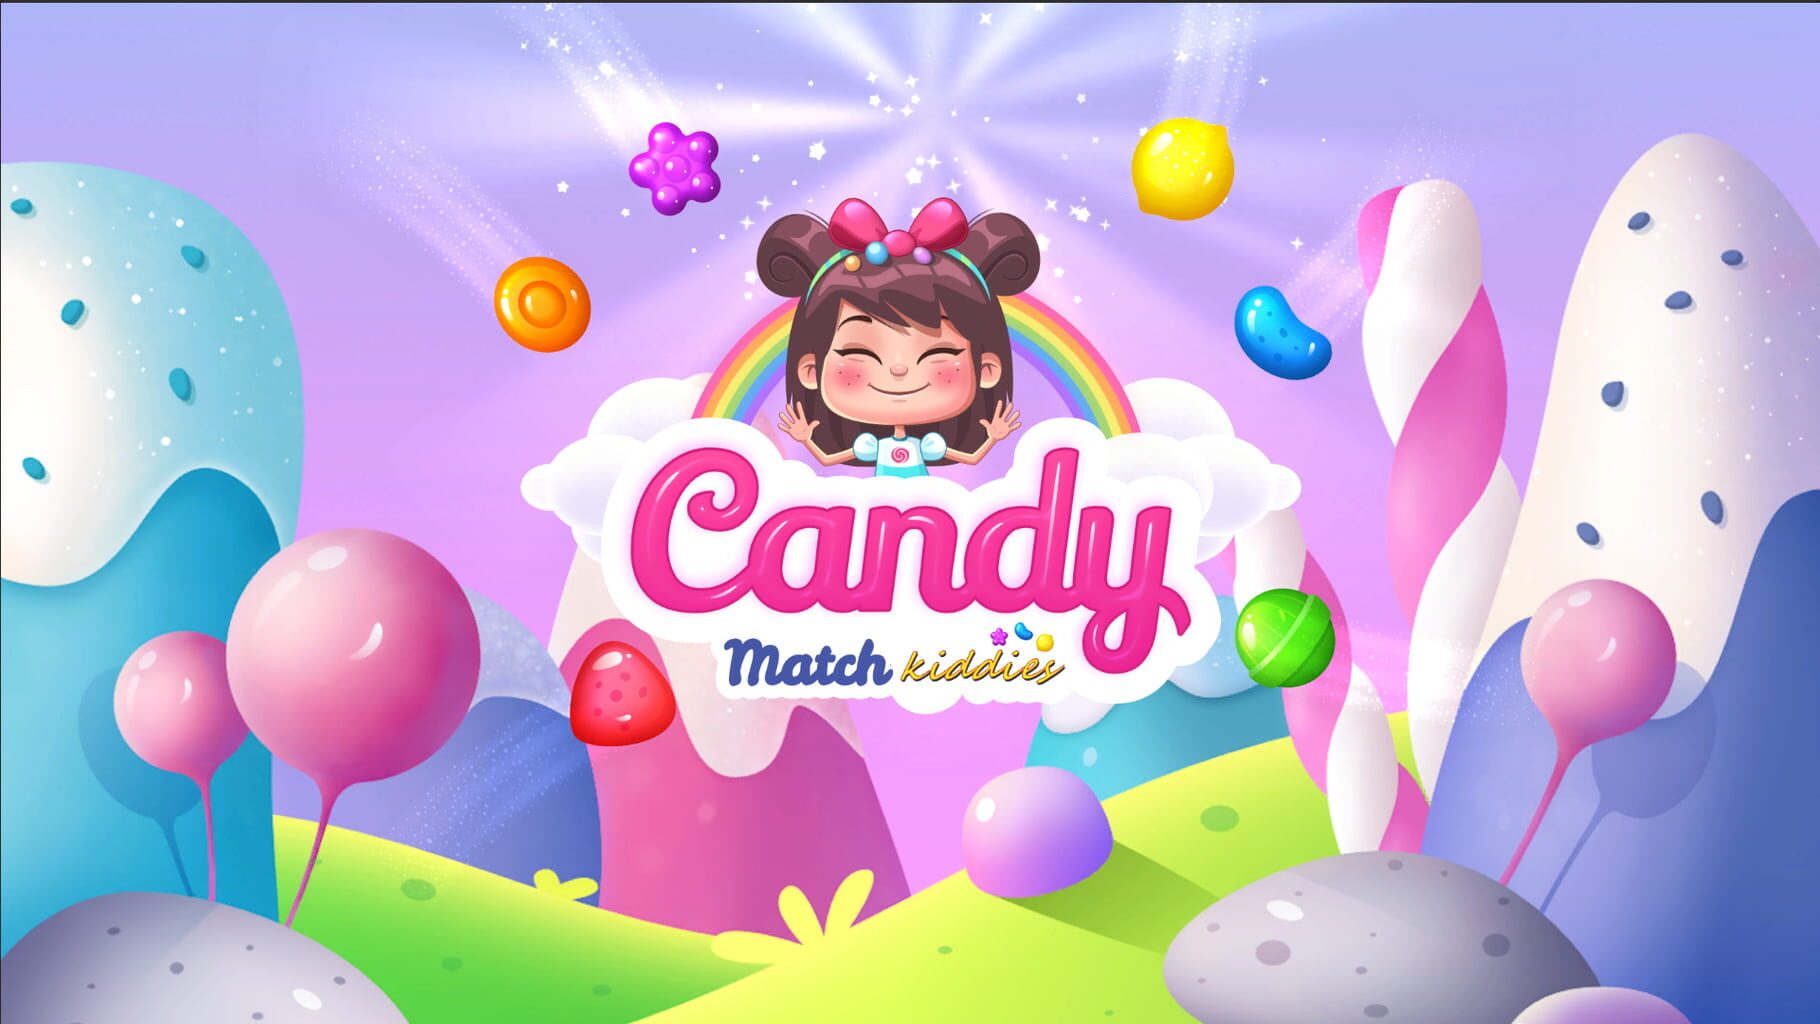 Candy Match Kiddies artwork